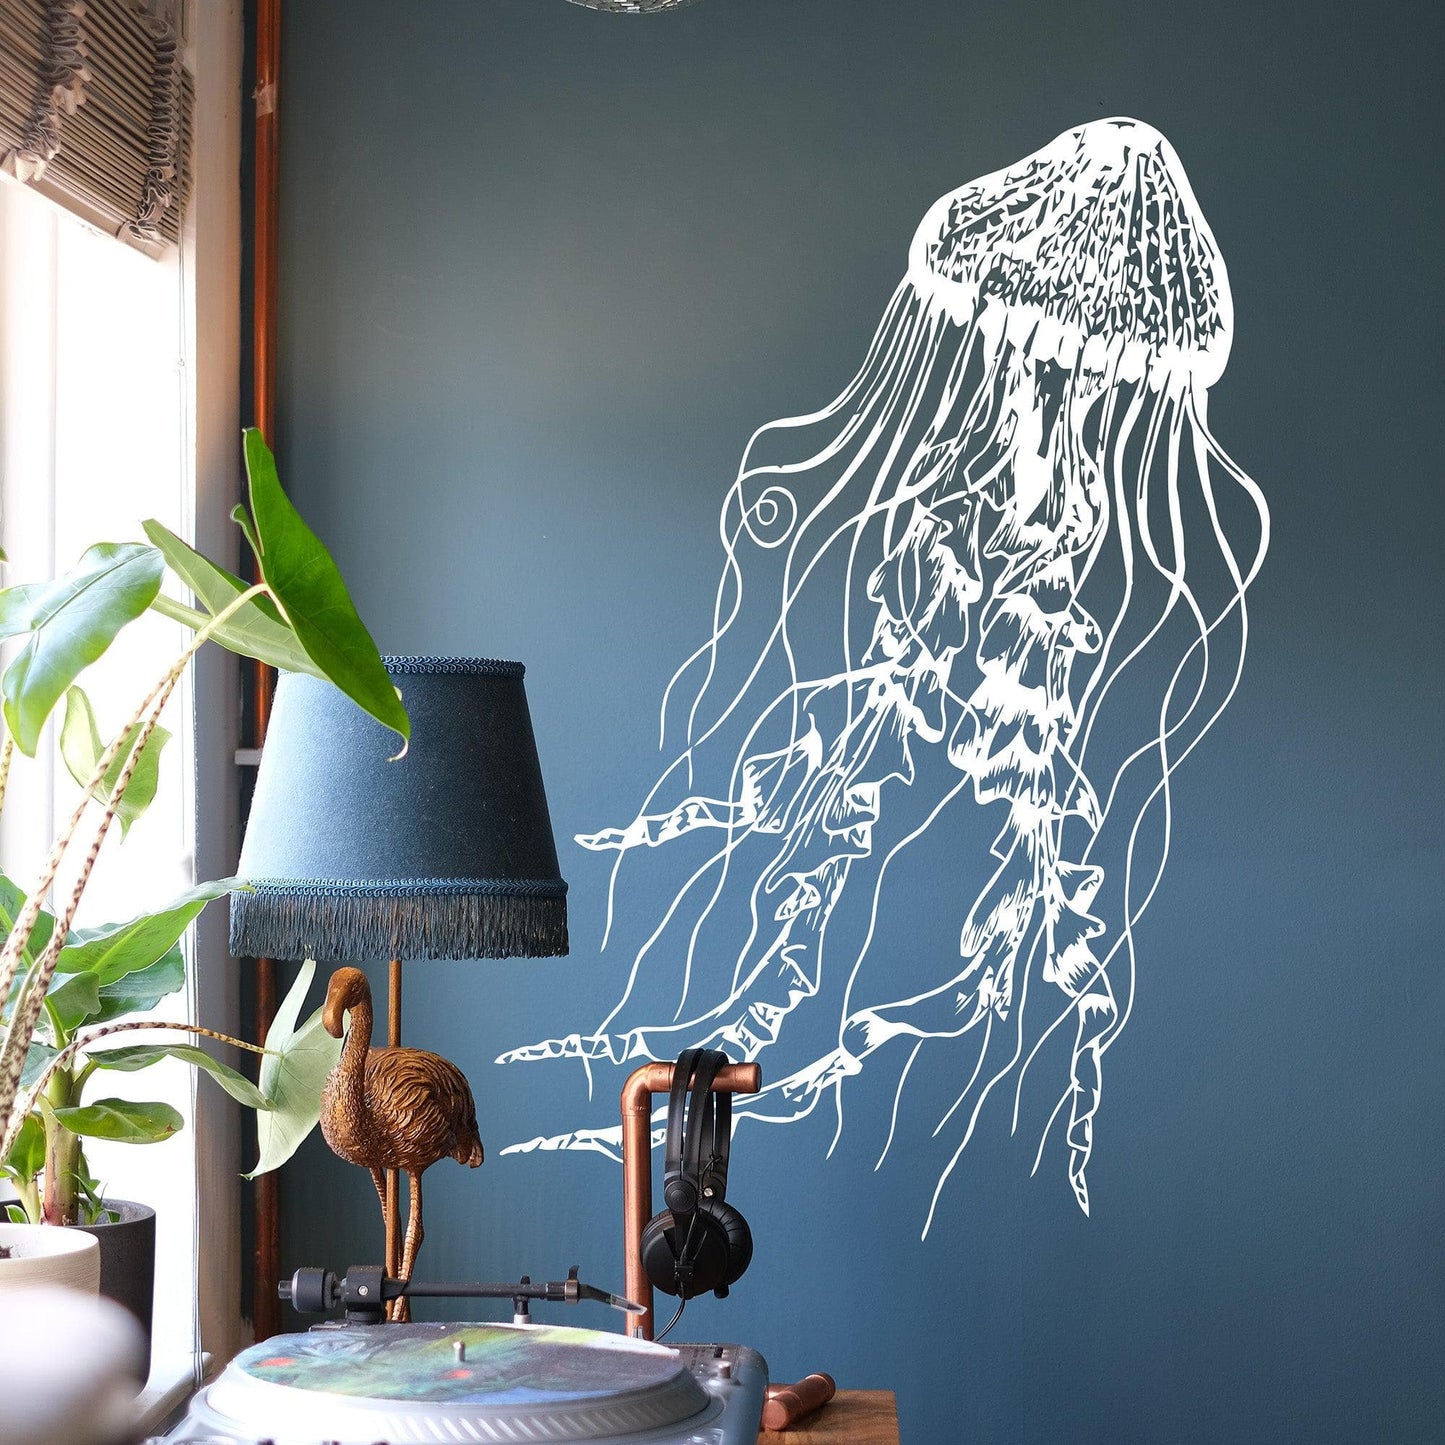 White jellyfish wall decal on a dark blue wall near a blue lamp.